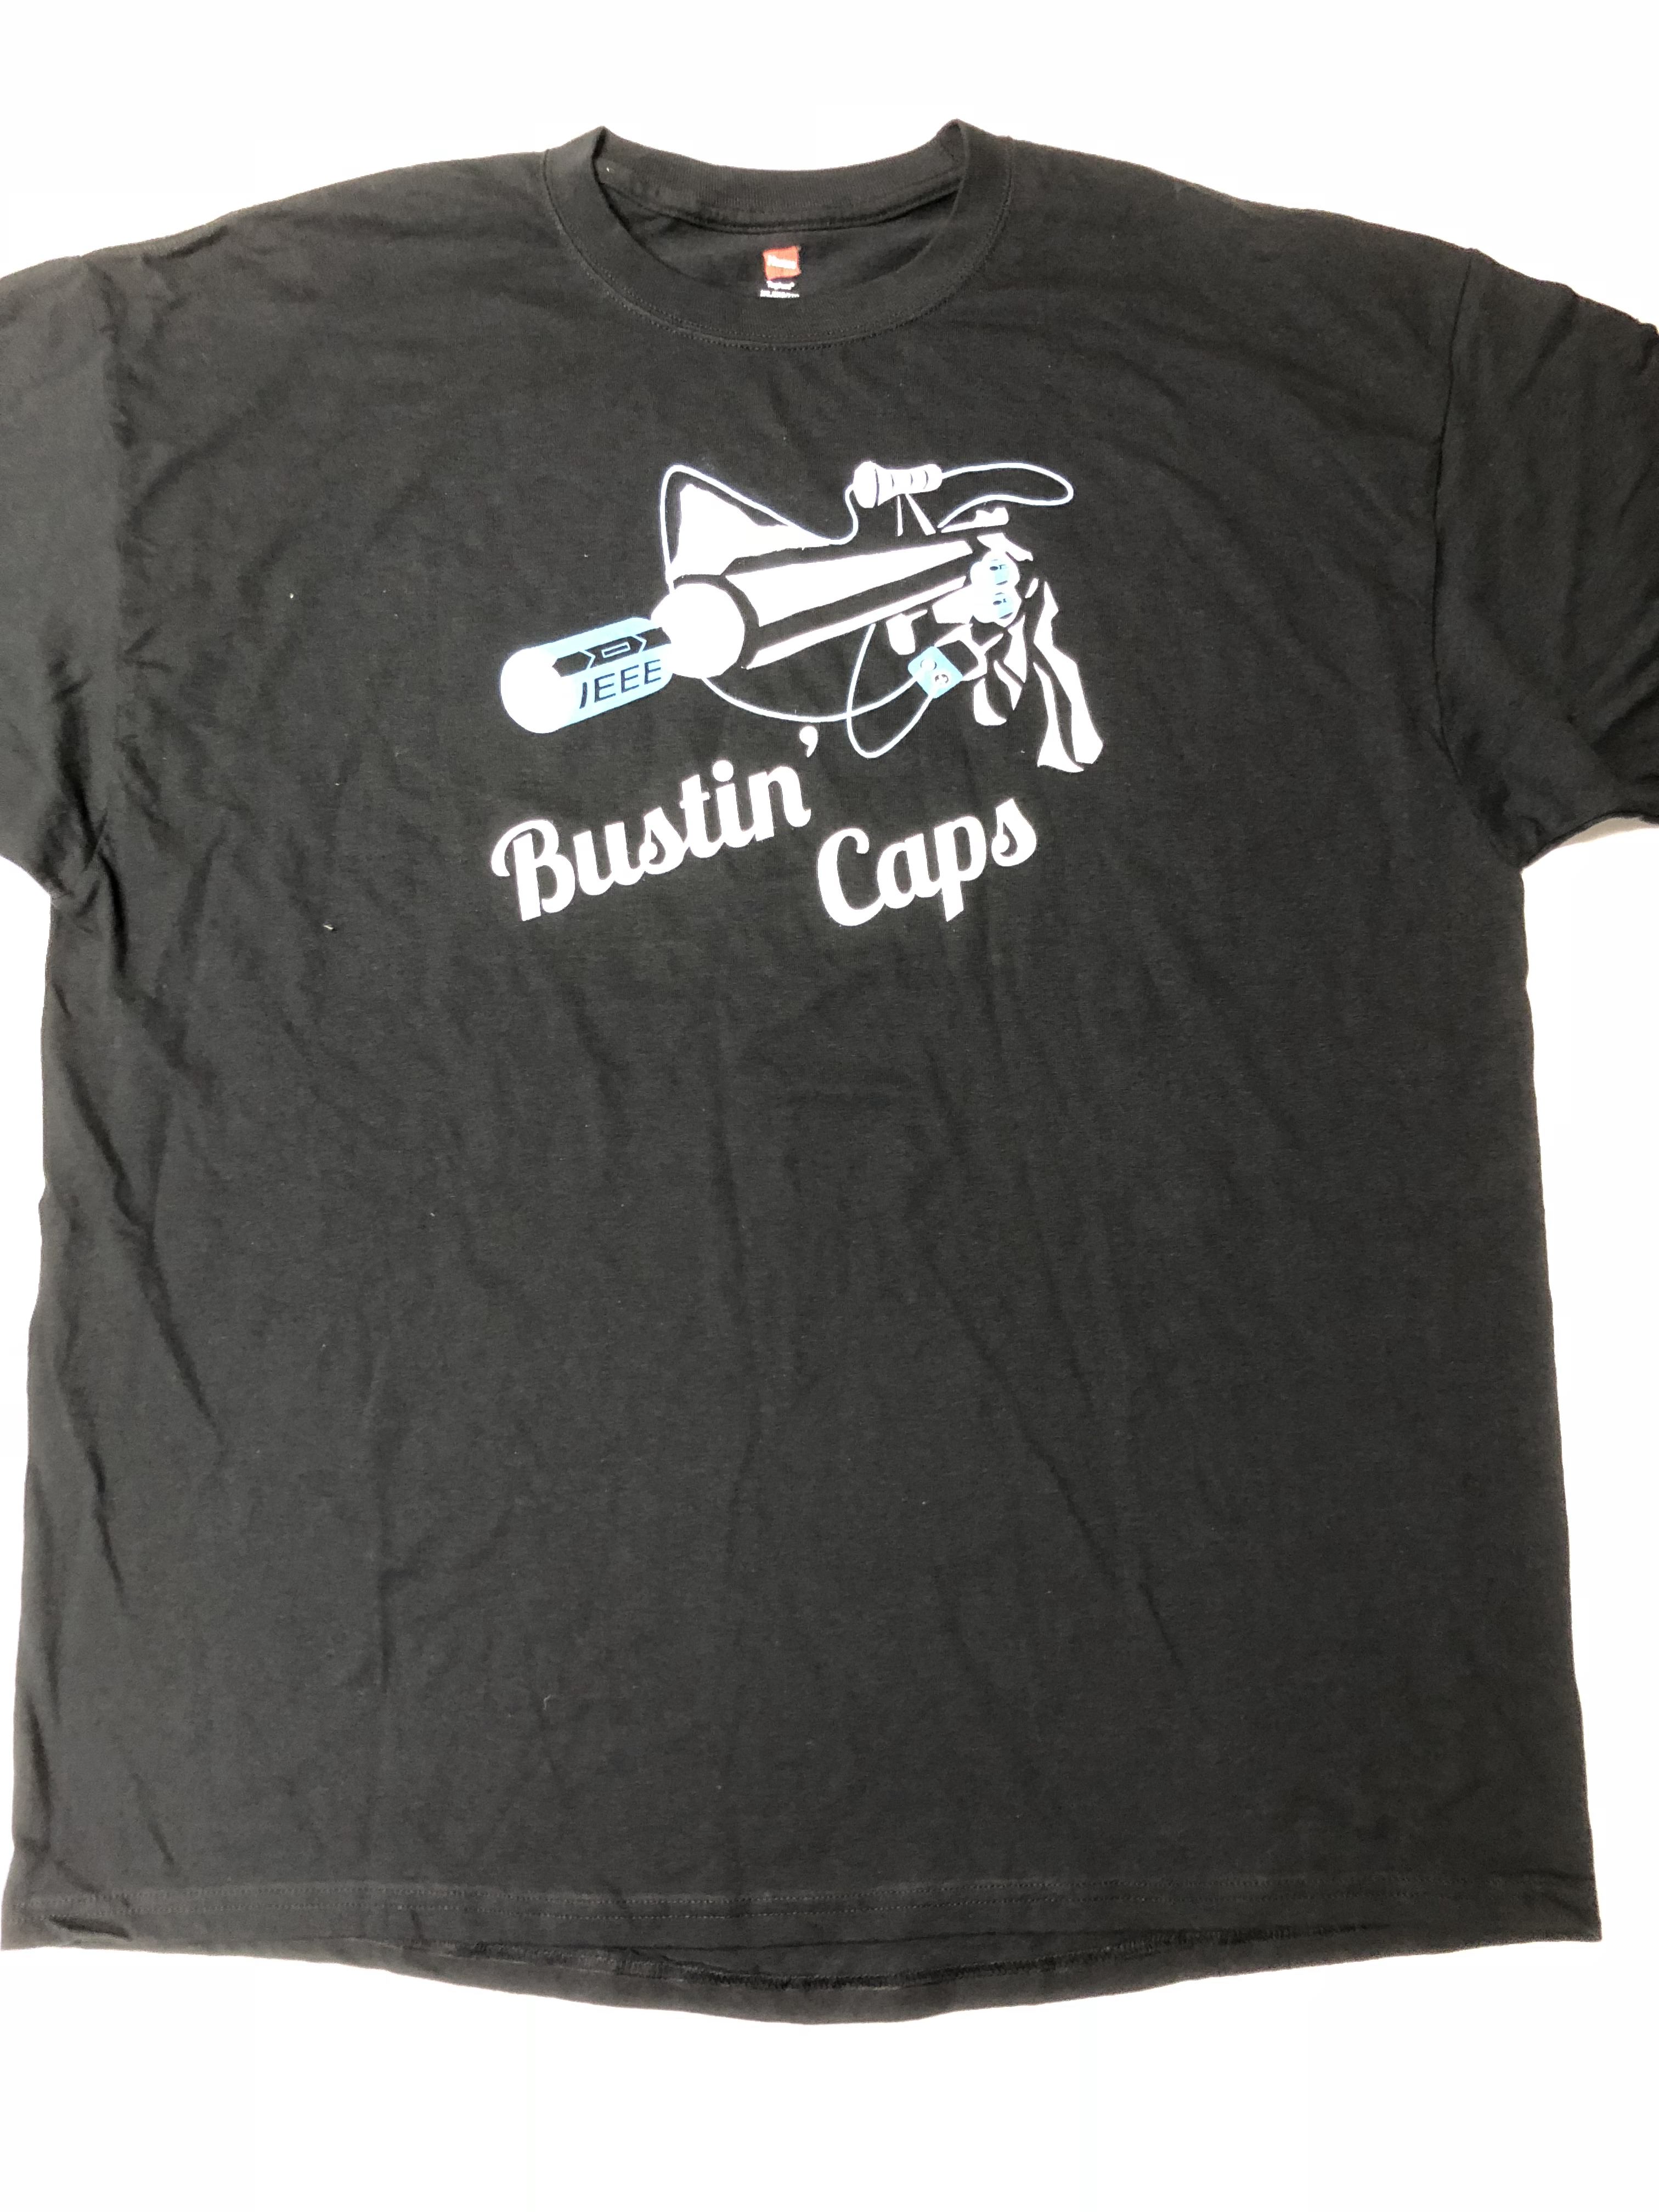 IEEE Bustin' Caps Shirt Front